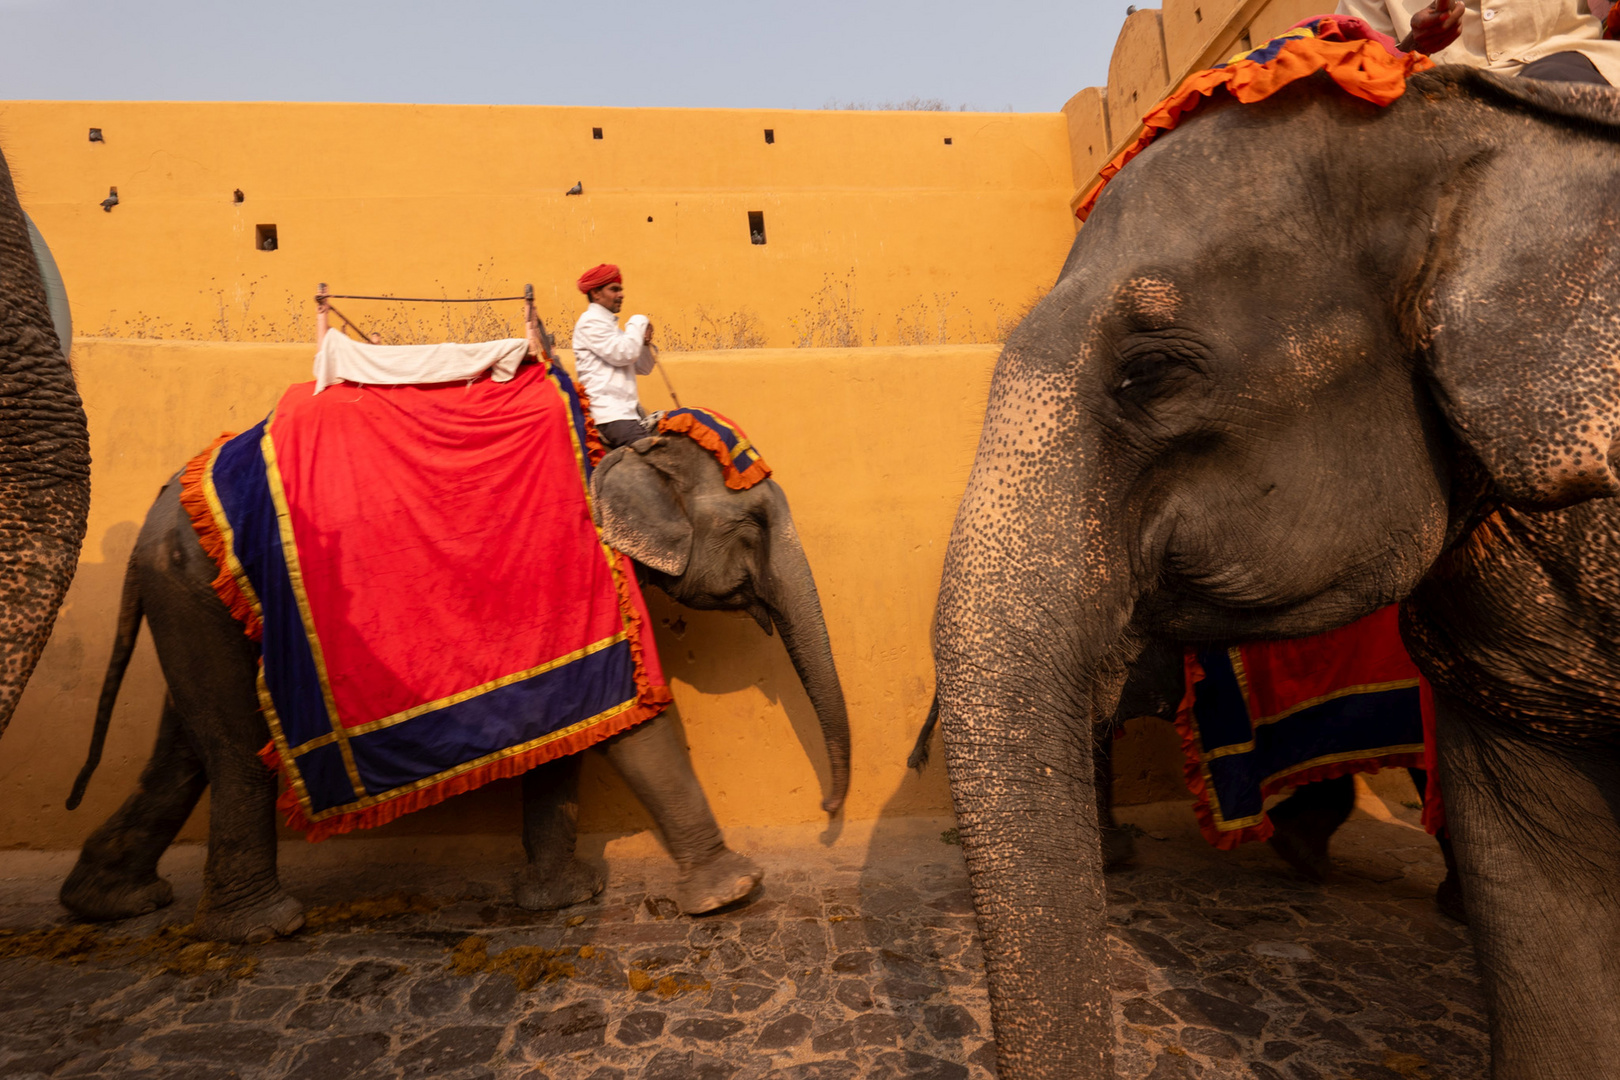 Elephanten auf dem Weg zum Amber Fort nahe Jaipur